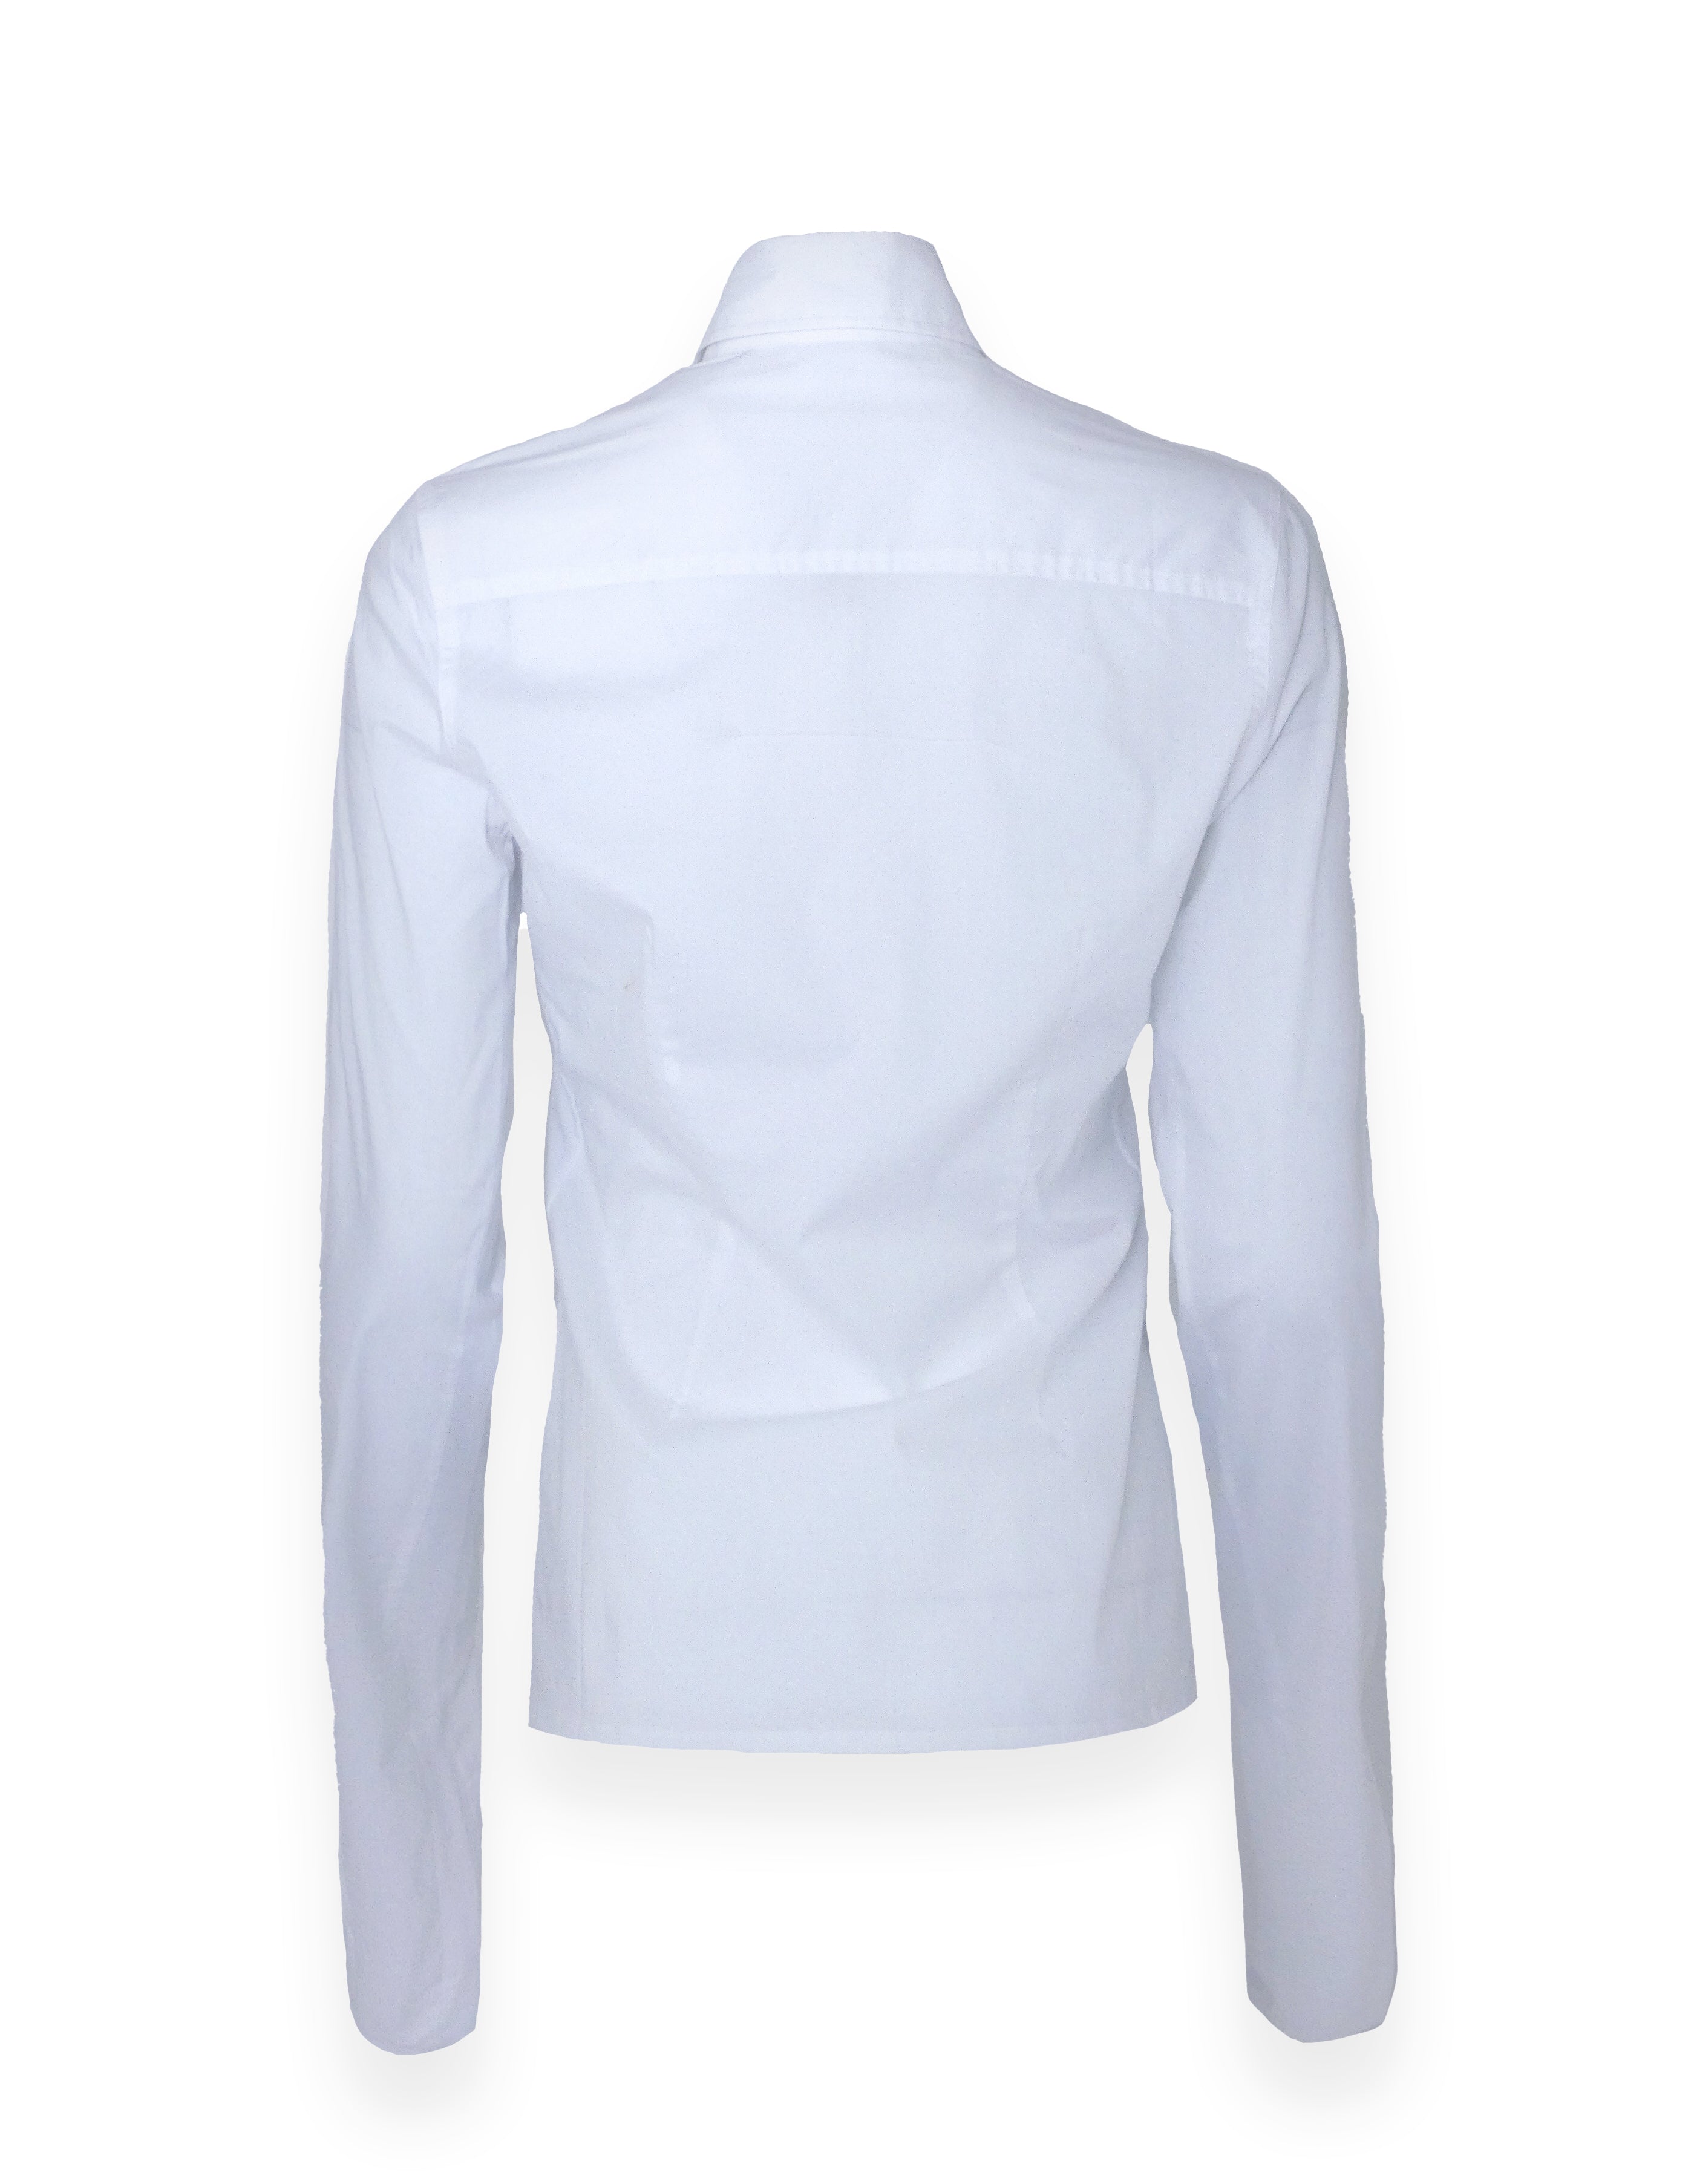 White Extra Long Sleeved Shirt